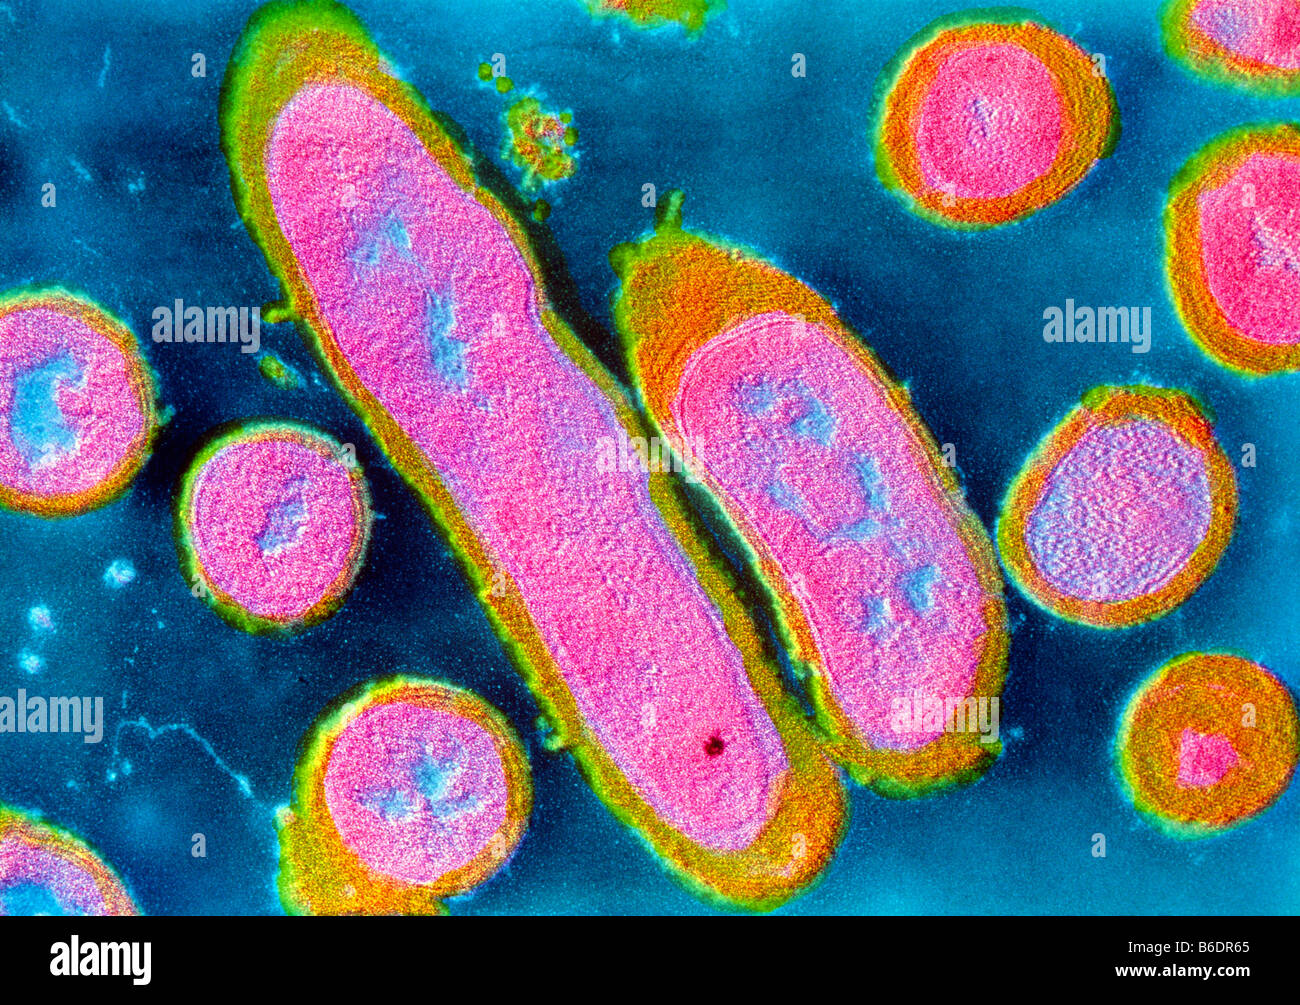 TEM of Erysipelothrix rhusiopathiae species of bacteria causing the skin disease Stock Photo